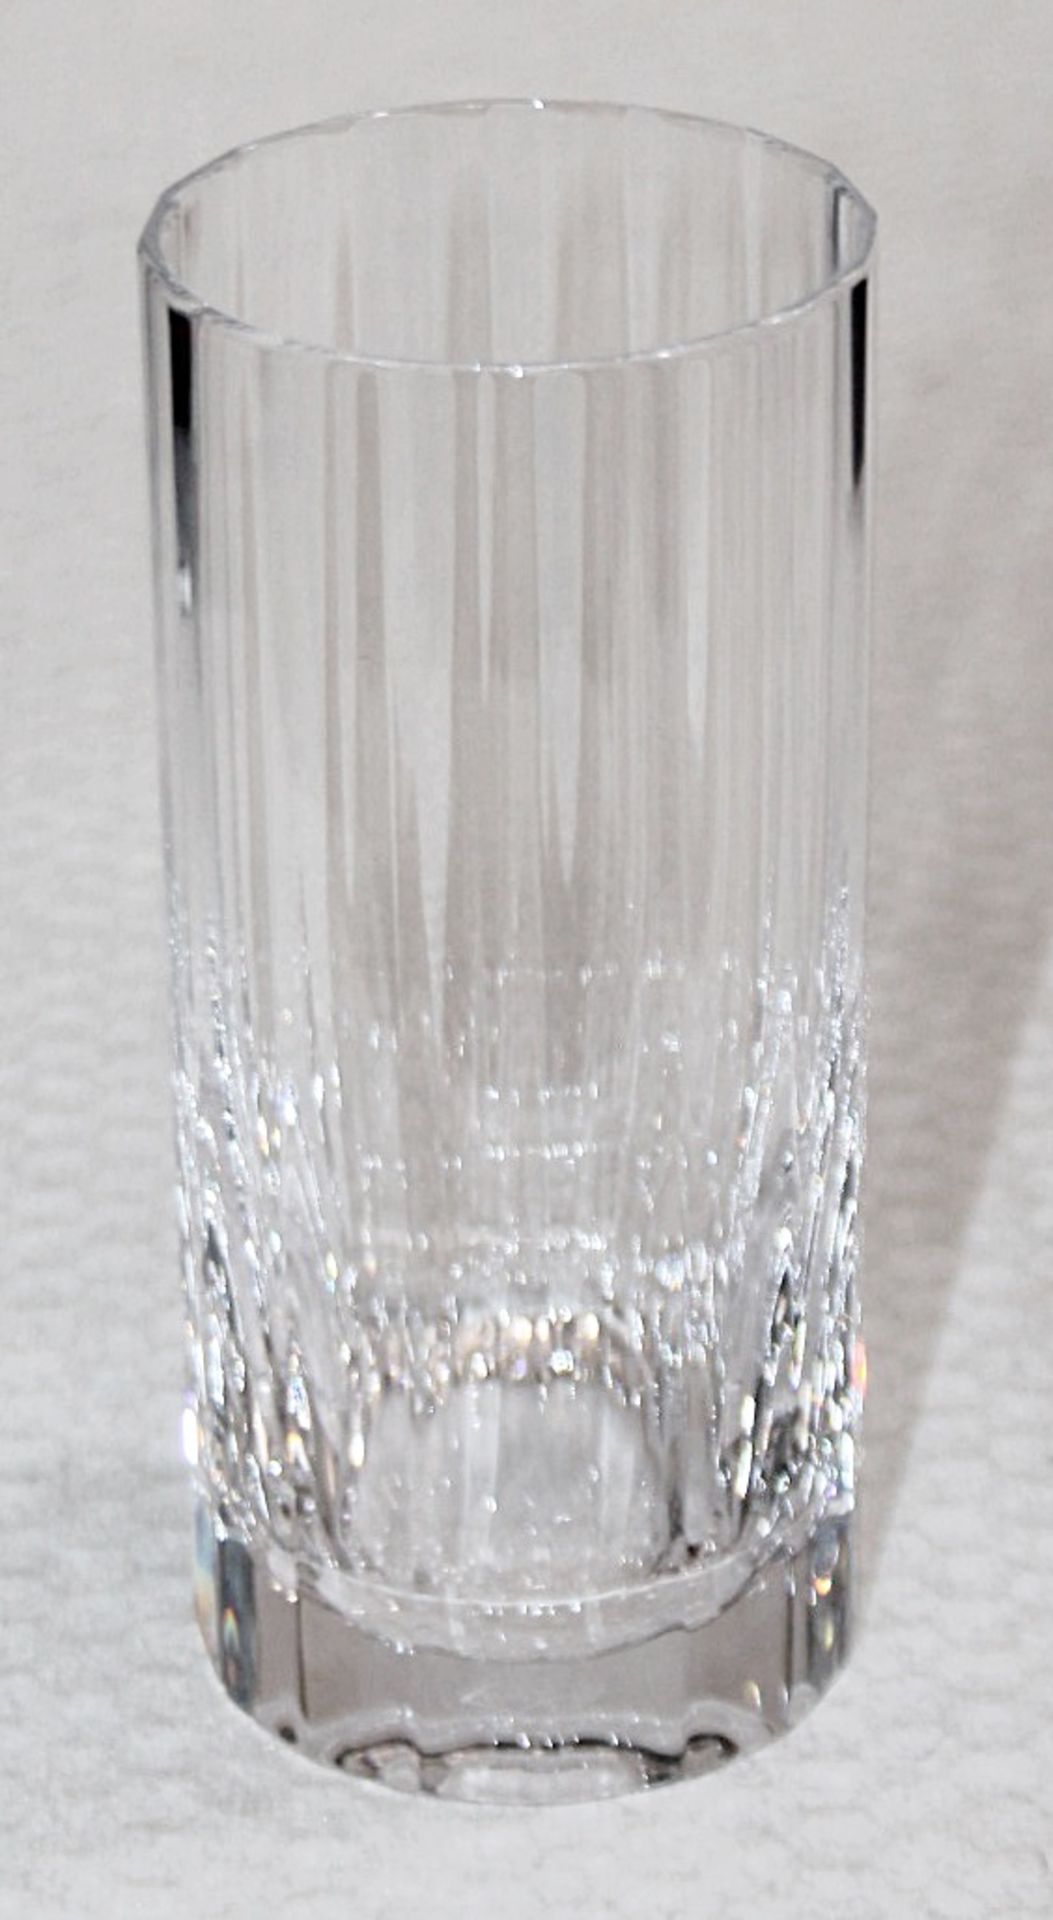 1 x RICHARD BRENDON Fluted Handmade Crystal Highball Glass (380ml) - Original Price £90.00 - Image 5 of 9